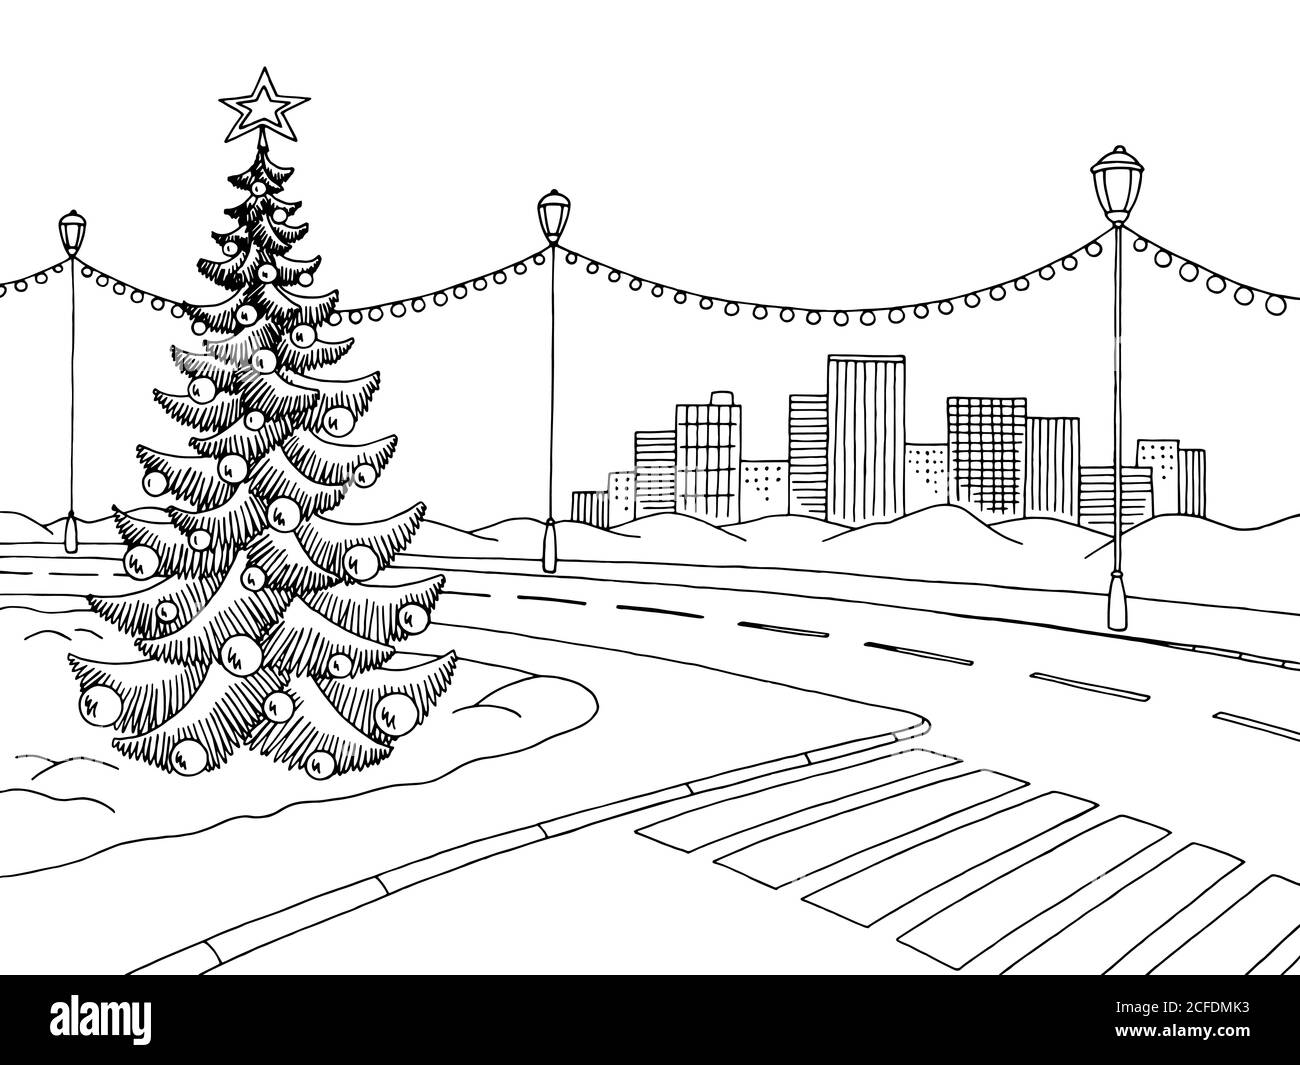 Winter Straßengrafik schwarz weiß Landschaft Skizze Illustration Vektor Stock Vektor